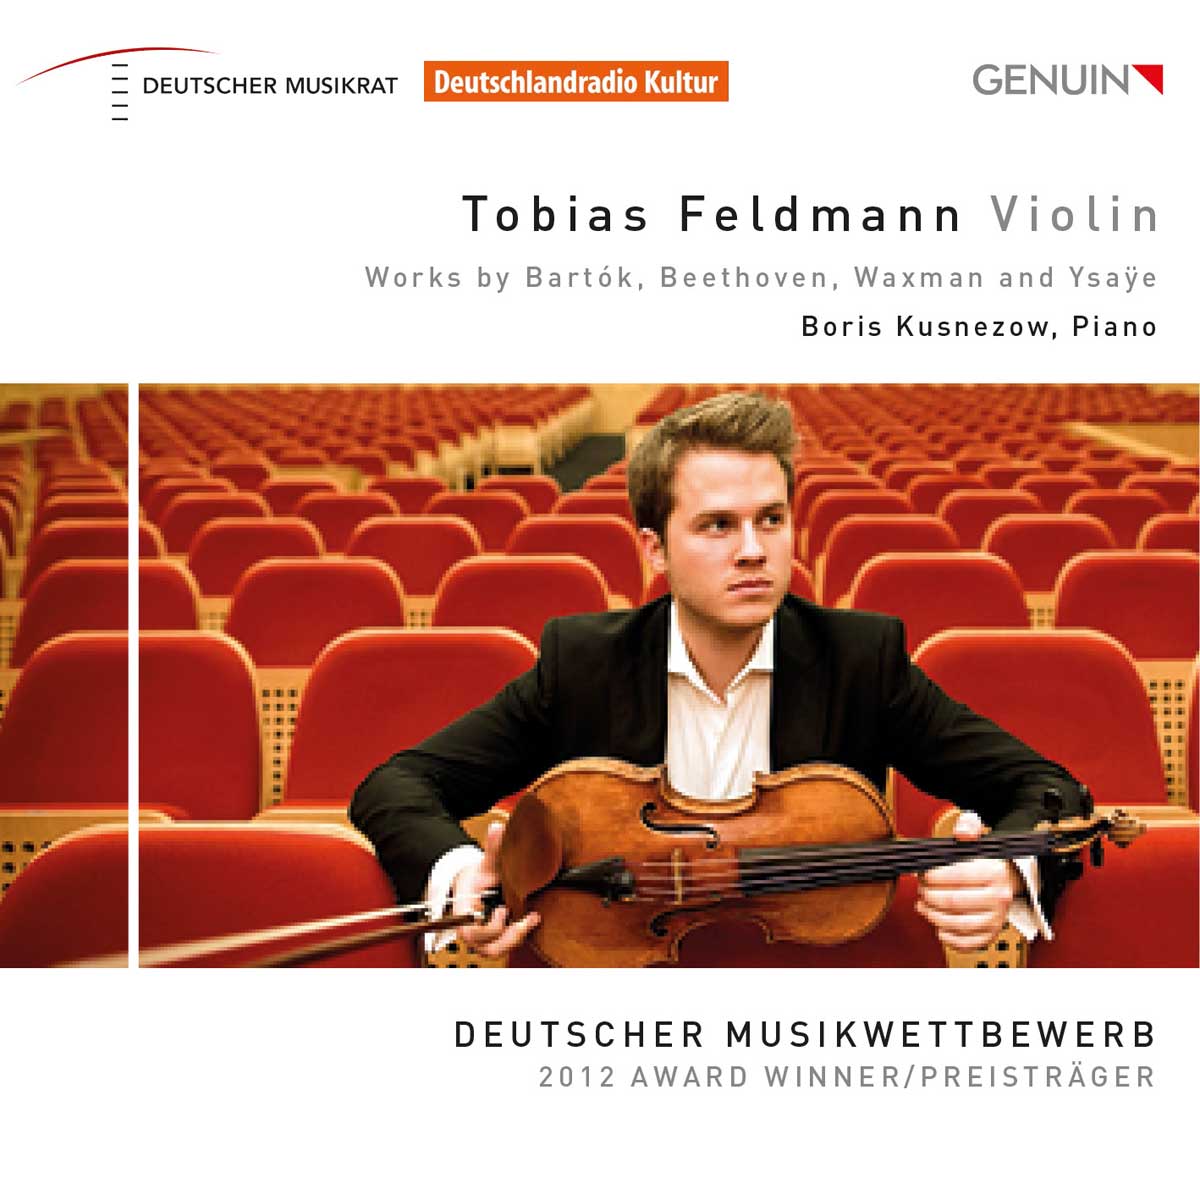 CD album cover 'Tobias Feldmann  Violin' (GEN 14316) with Tobias Feldmann, Boris Kusnezow